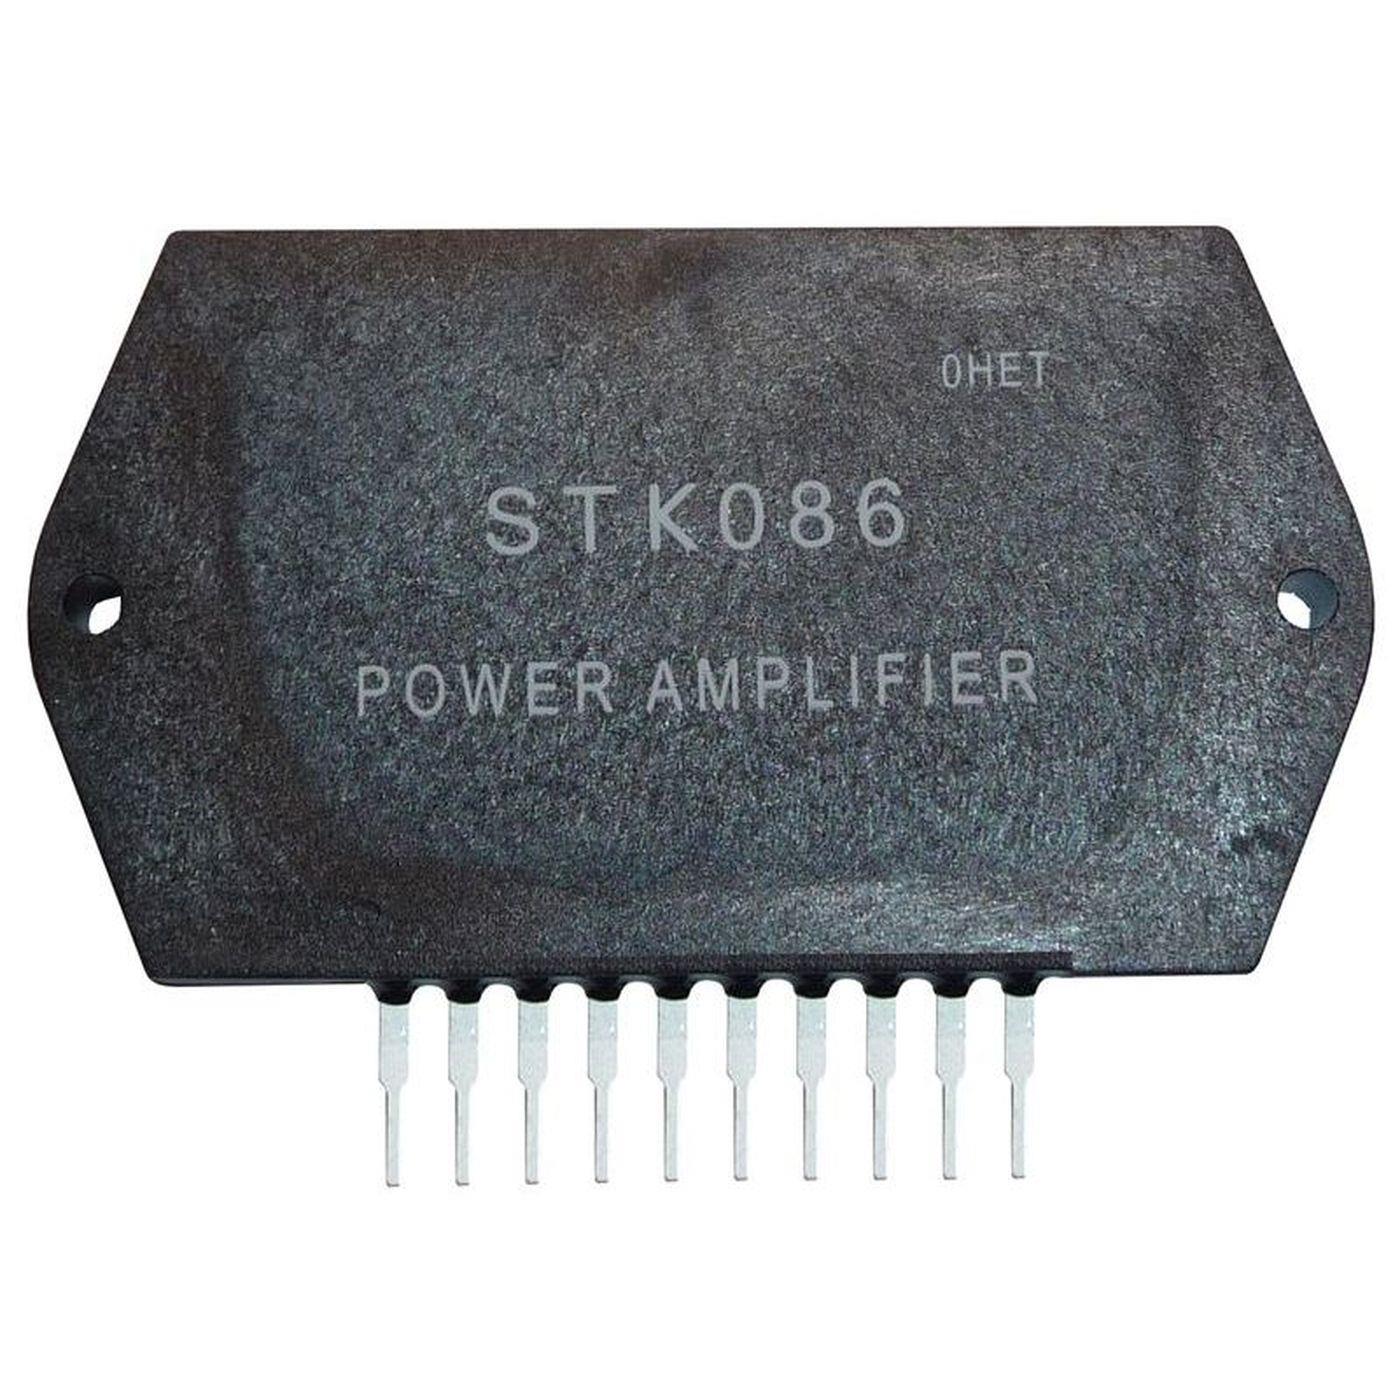 Hybrid IC STK086 80x45mm Power amplifier